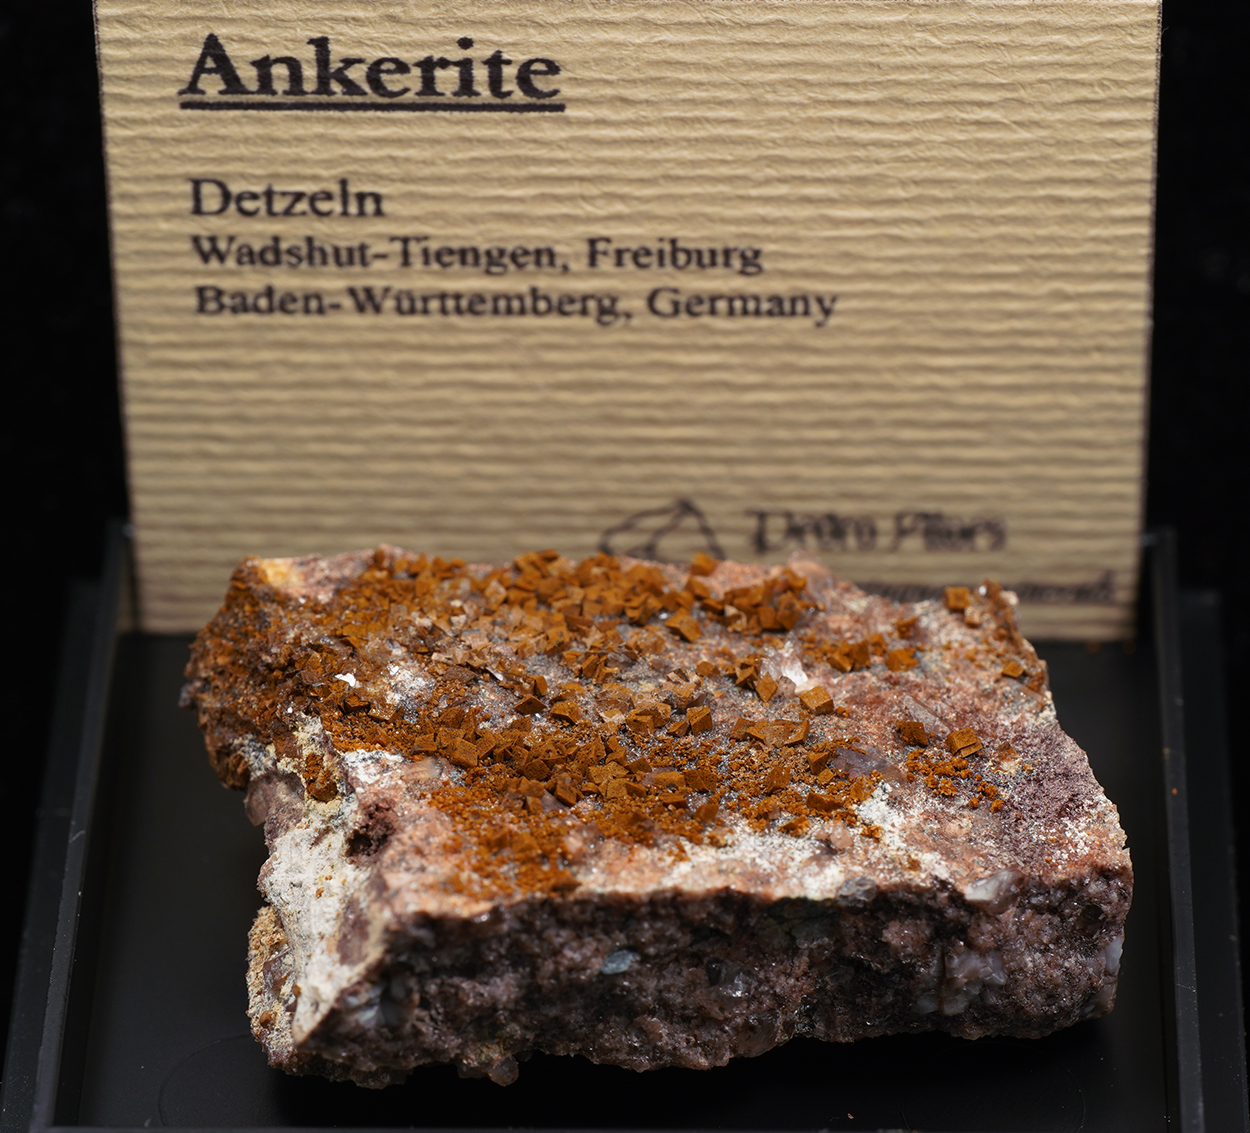 Ankerite